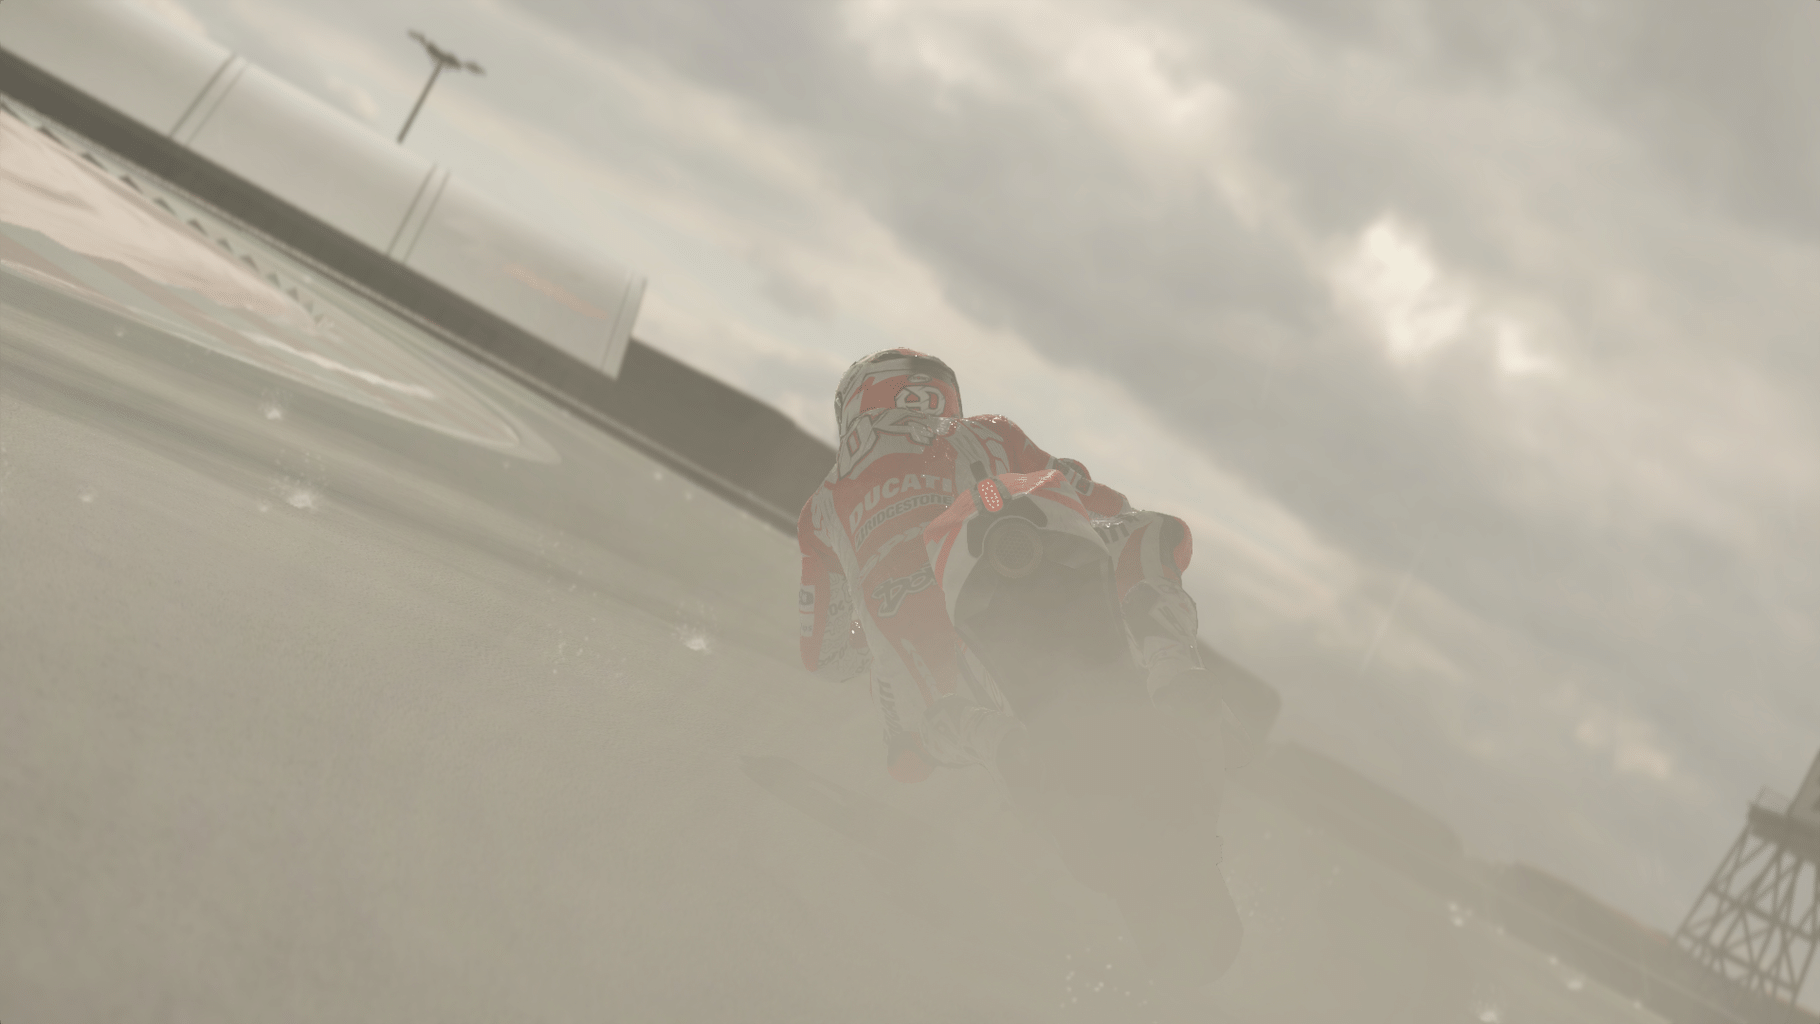 MotoGP 14 screenshot